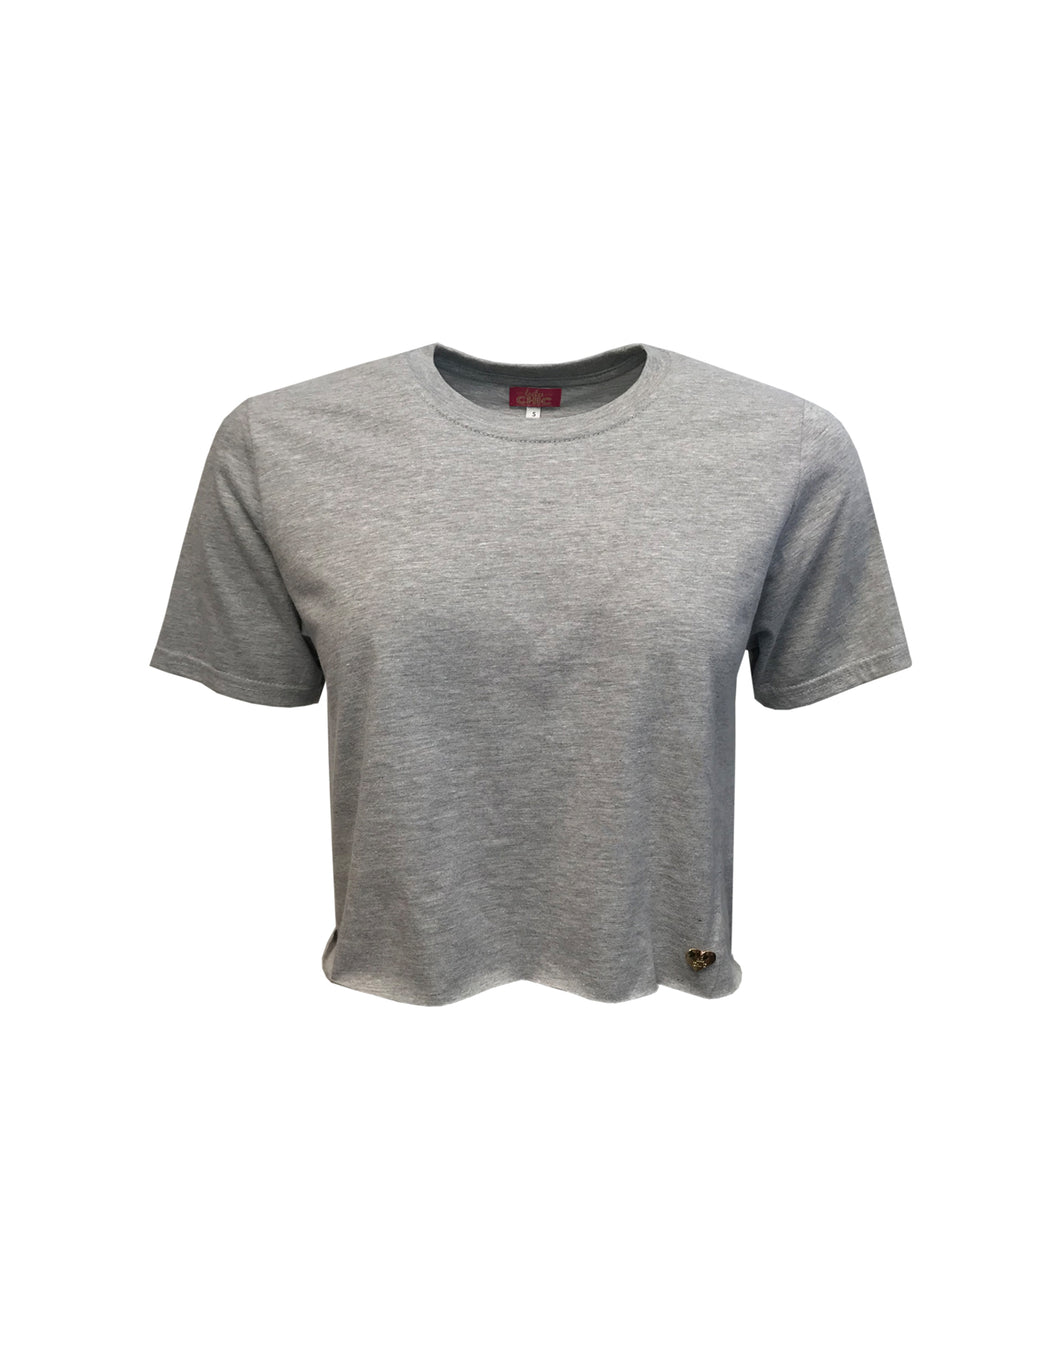 LAST PIECES - Grey Breeze Cropped T-shirt - S - M